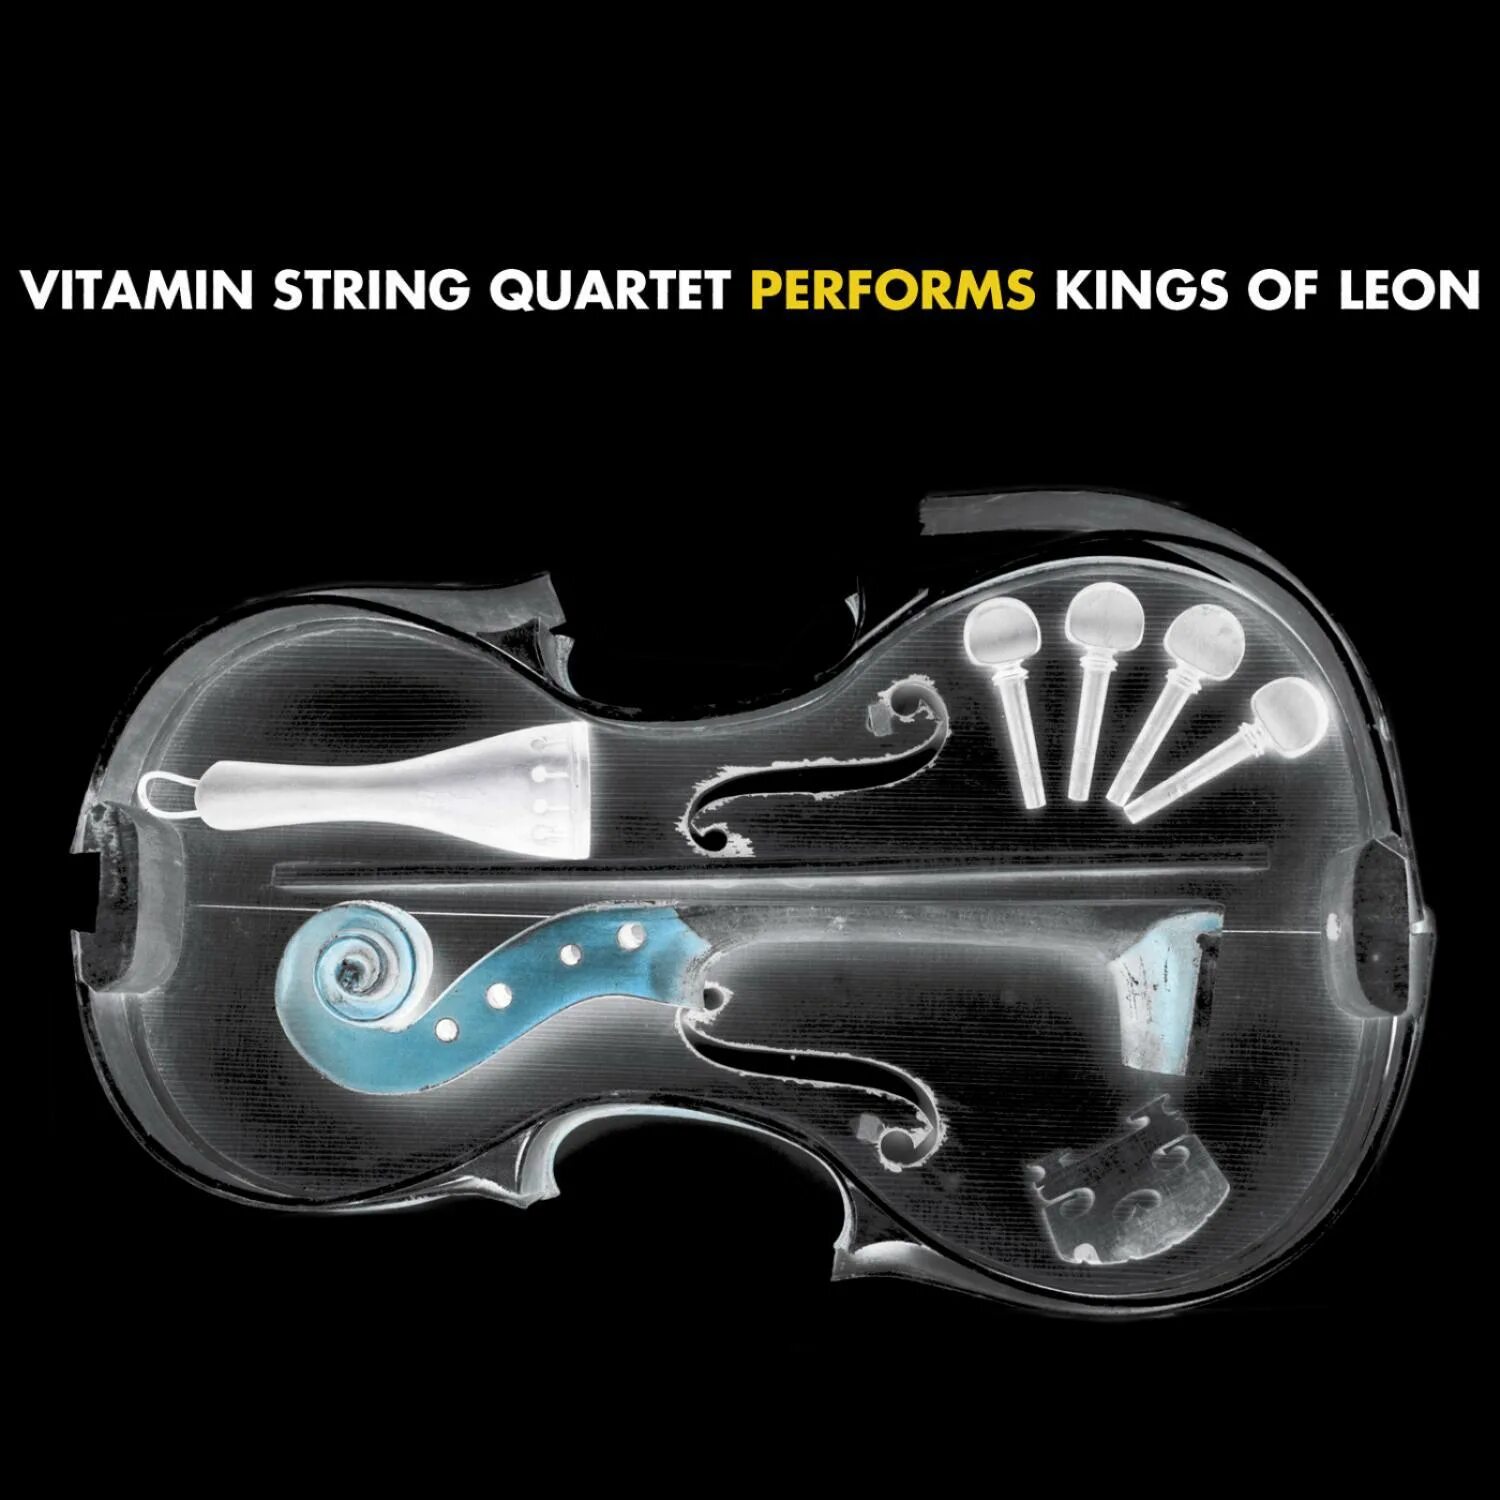 Vitamin quartet. Vitamin String. Vitamin String Quartet. Vitamin String Quartet альбомы. Стринг квартет.